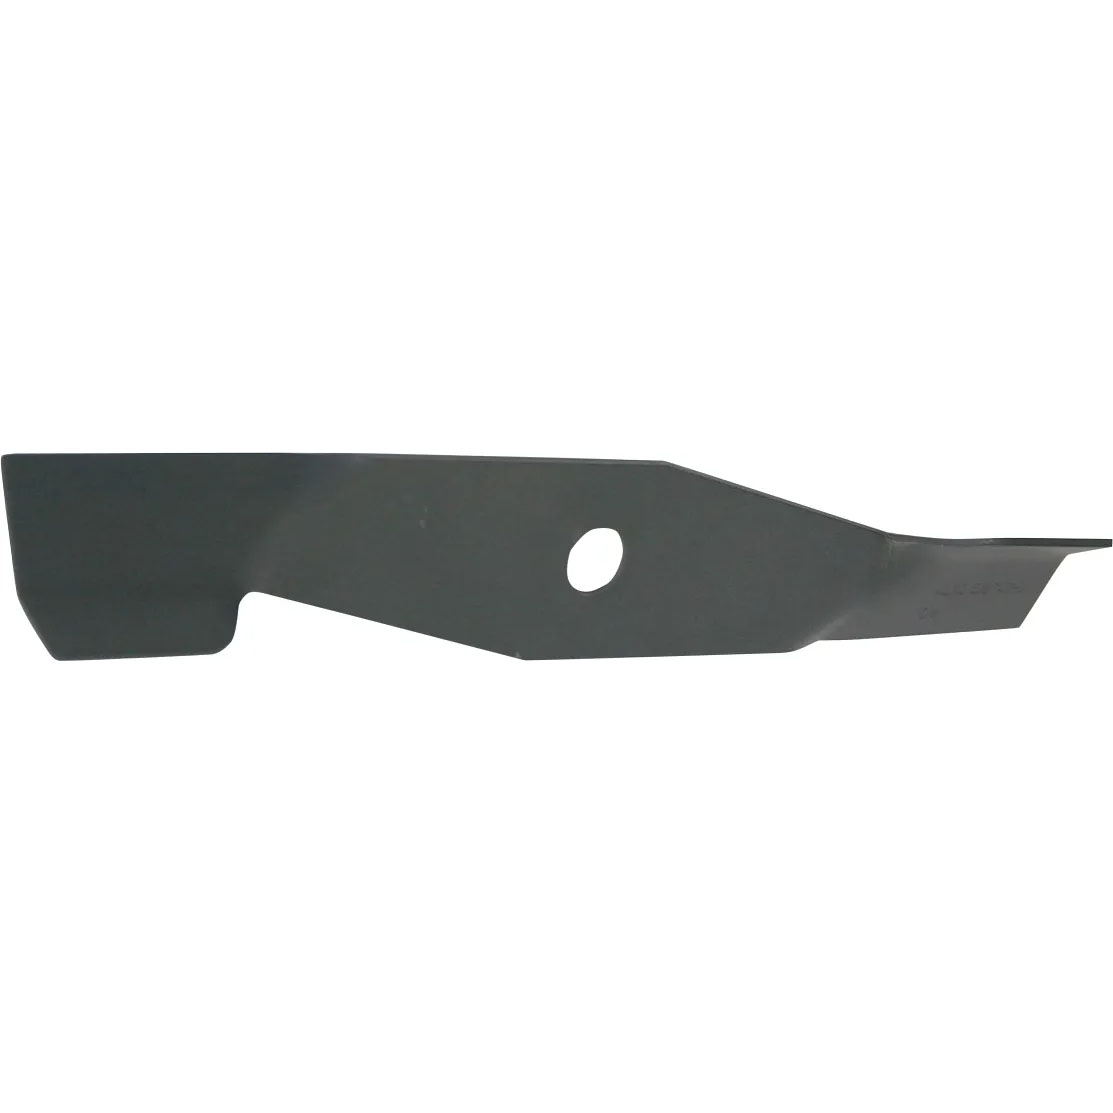 Нож для газонокосилок AL-KO 474544 38 см нож для триммера al ko для моделей bc 1200 e